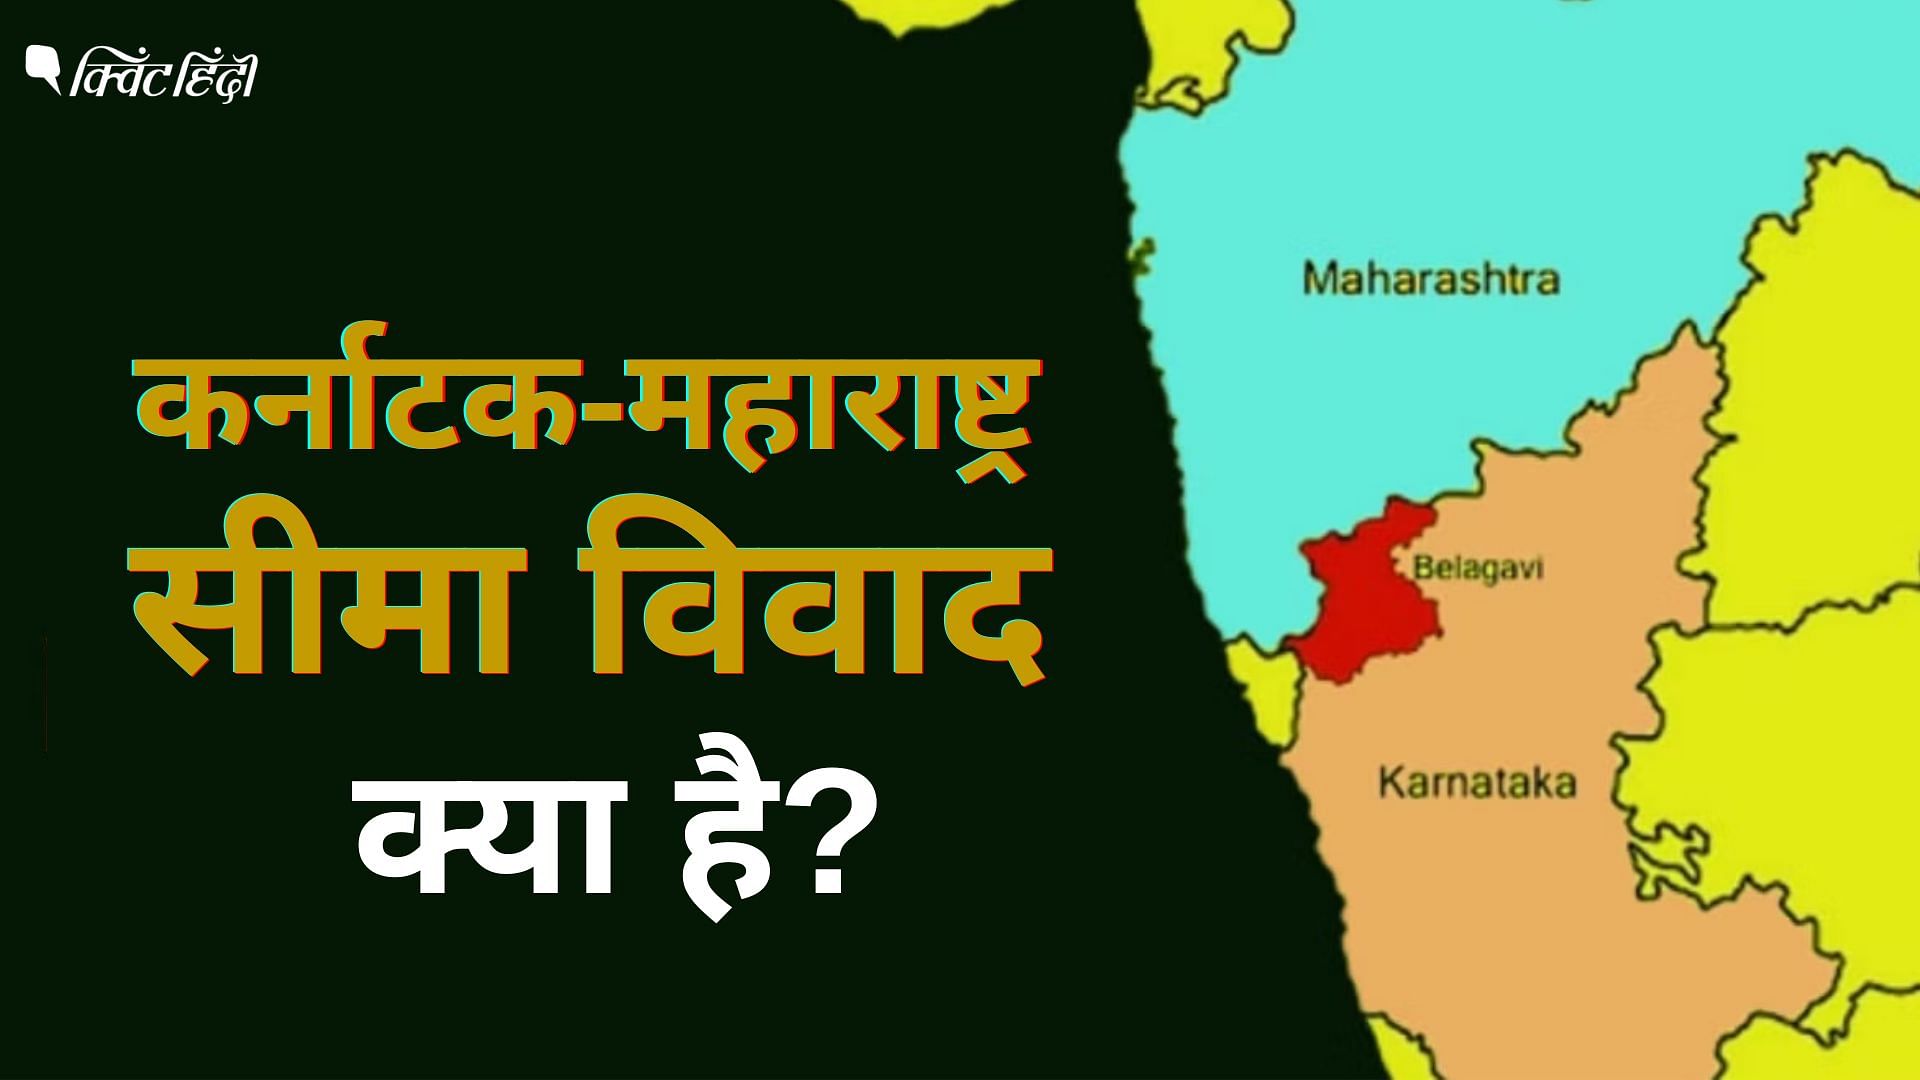 <div class="paragraphs"><p>Karnataka Maharashtra Border Row Explained&nbsp;</p></div>